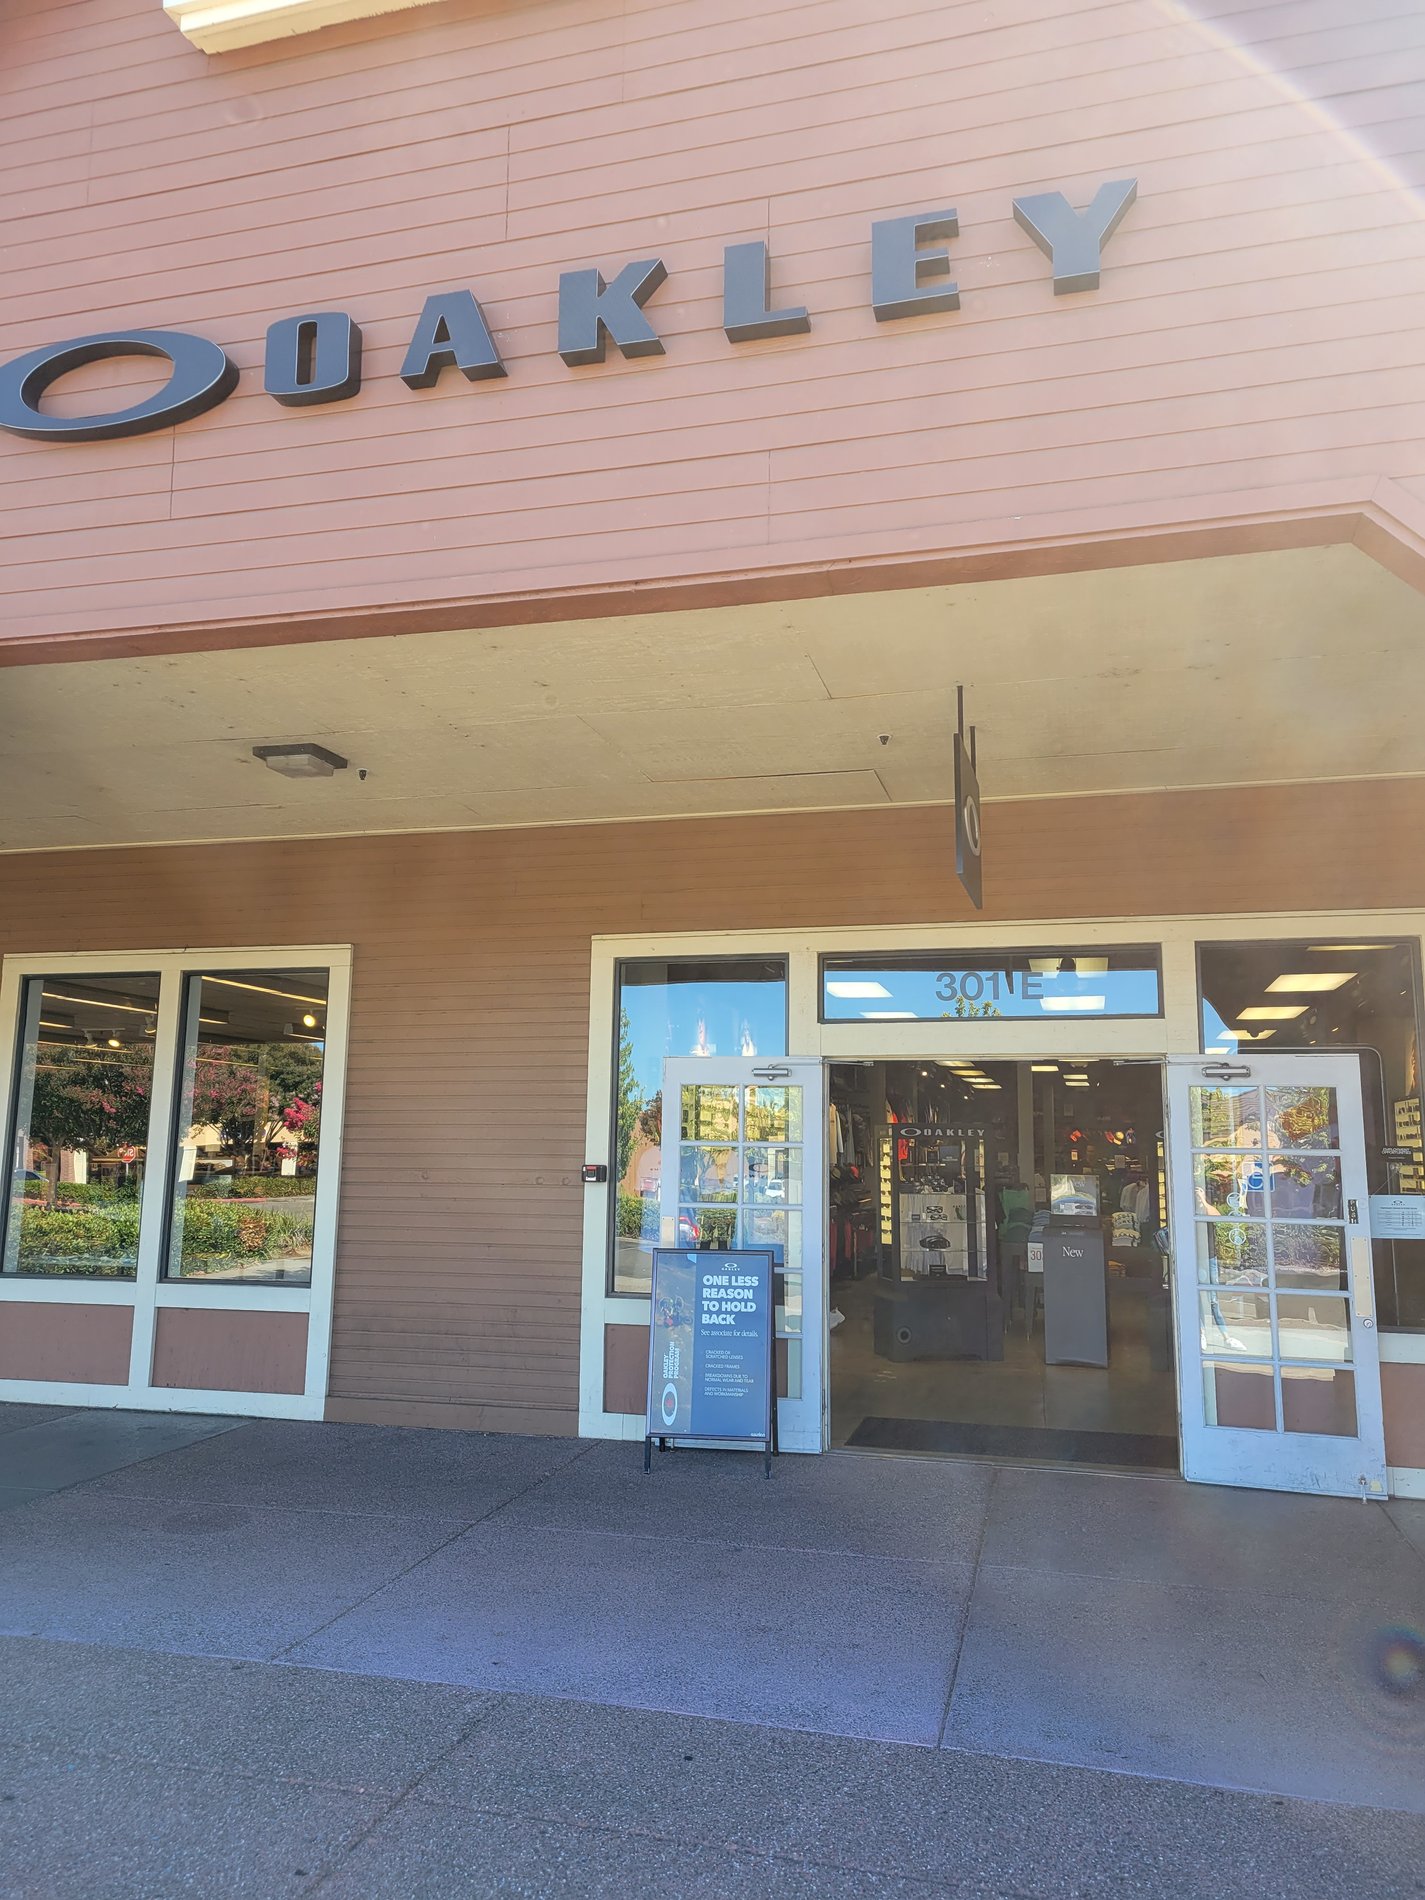 Oakley Vault, 301 Nut Tree Rd Vacaville, CA  Men's and Women's Sunglasses,  Goggles, & Apparel